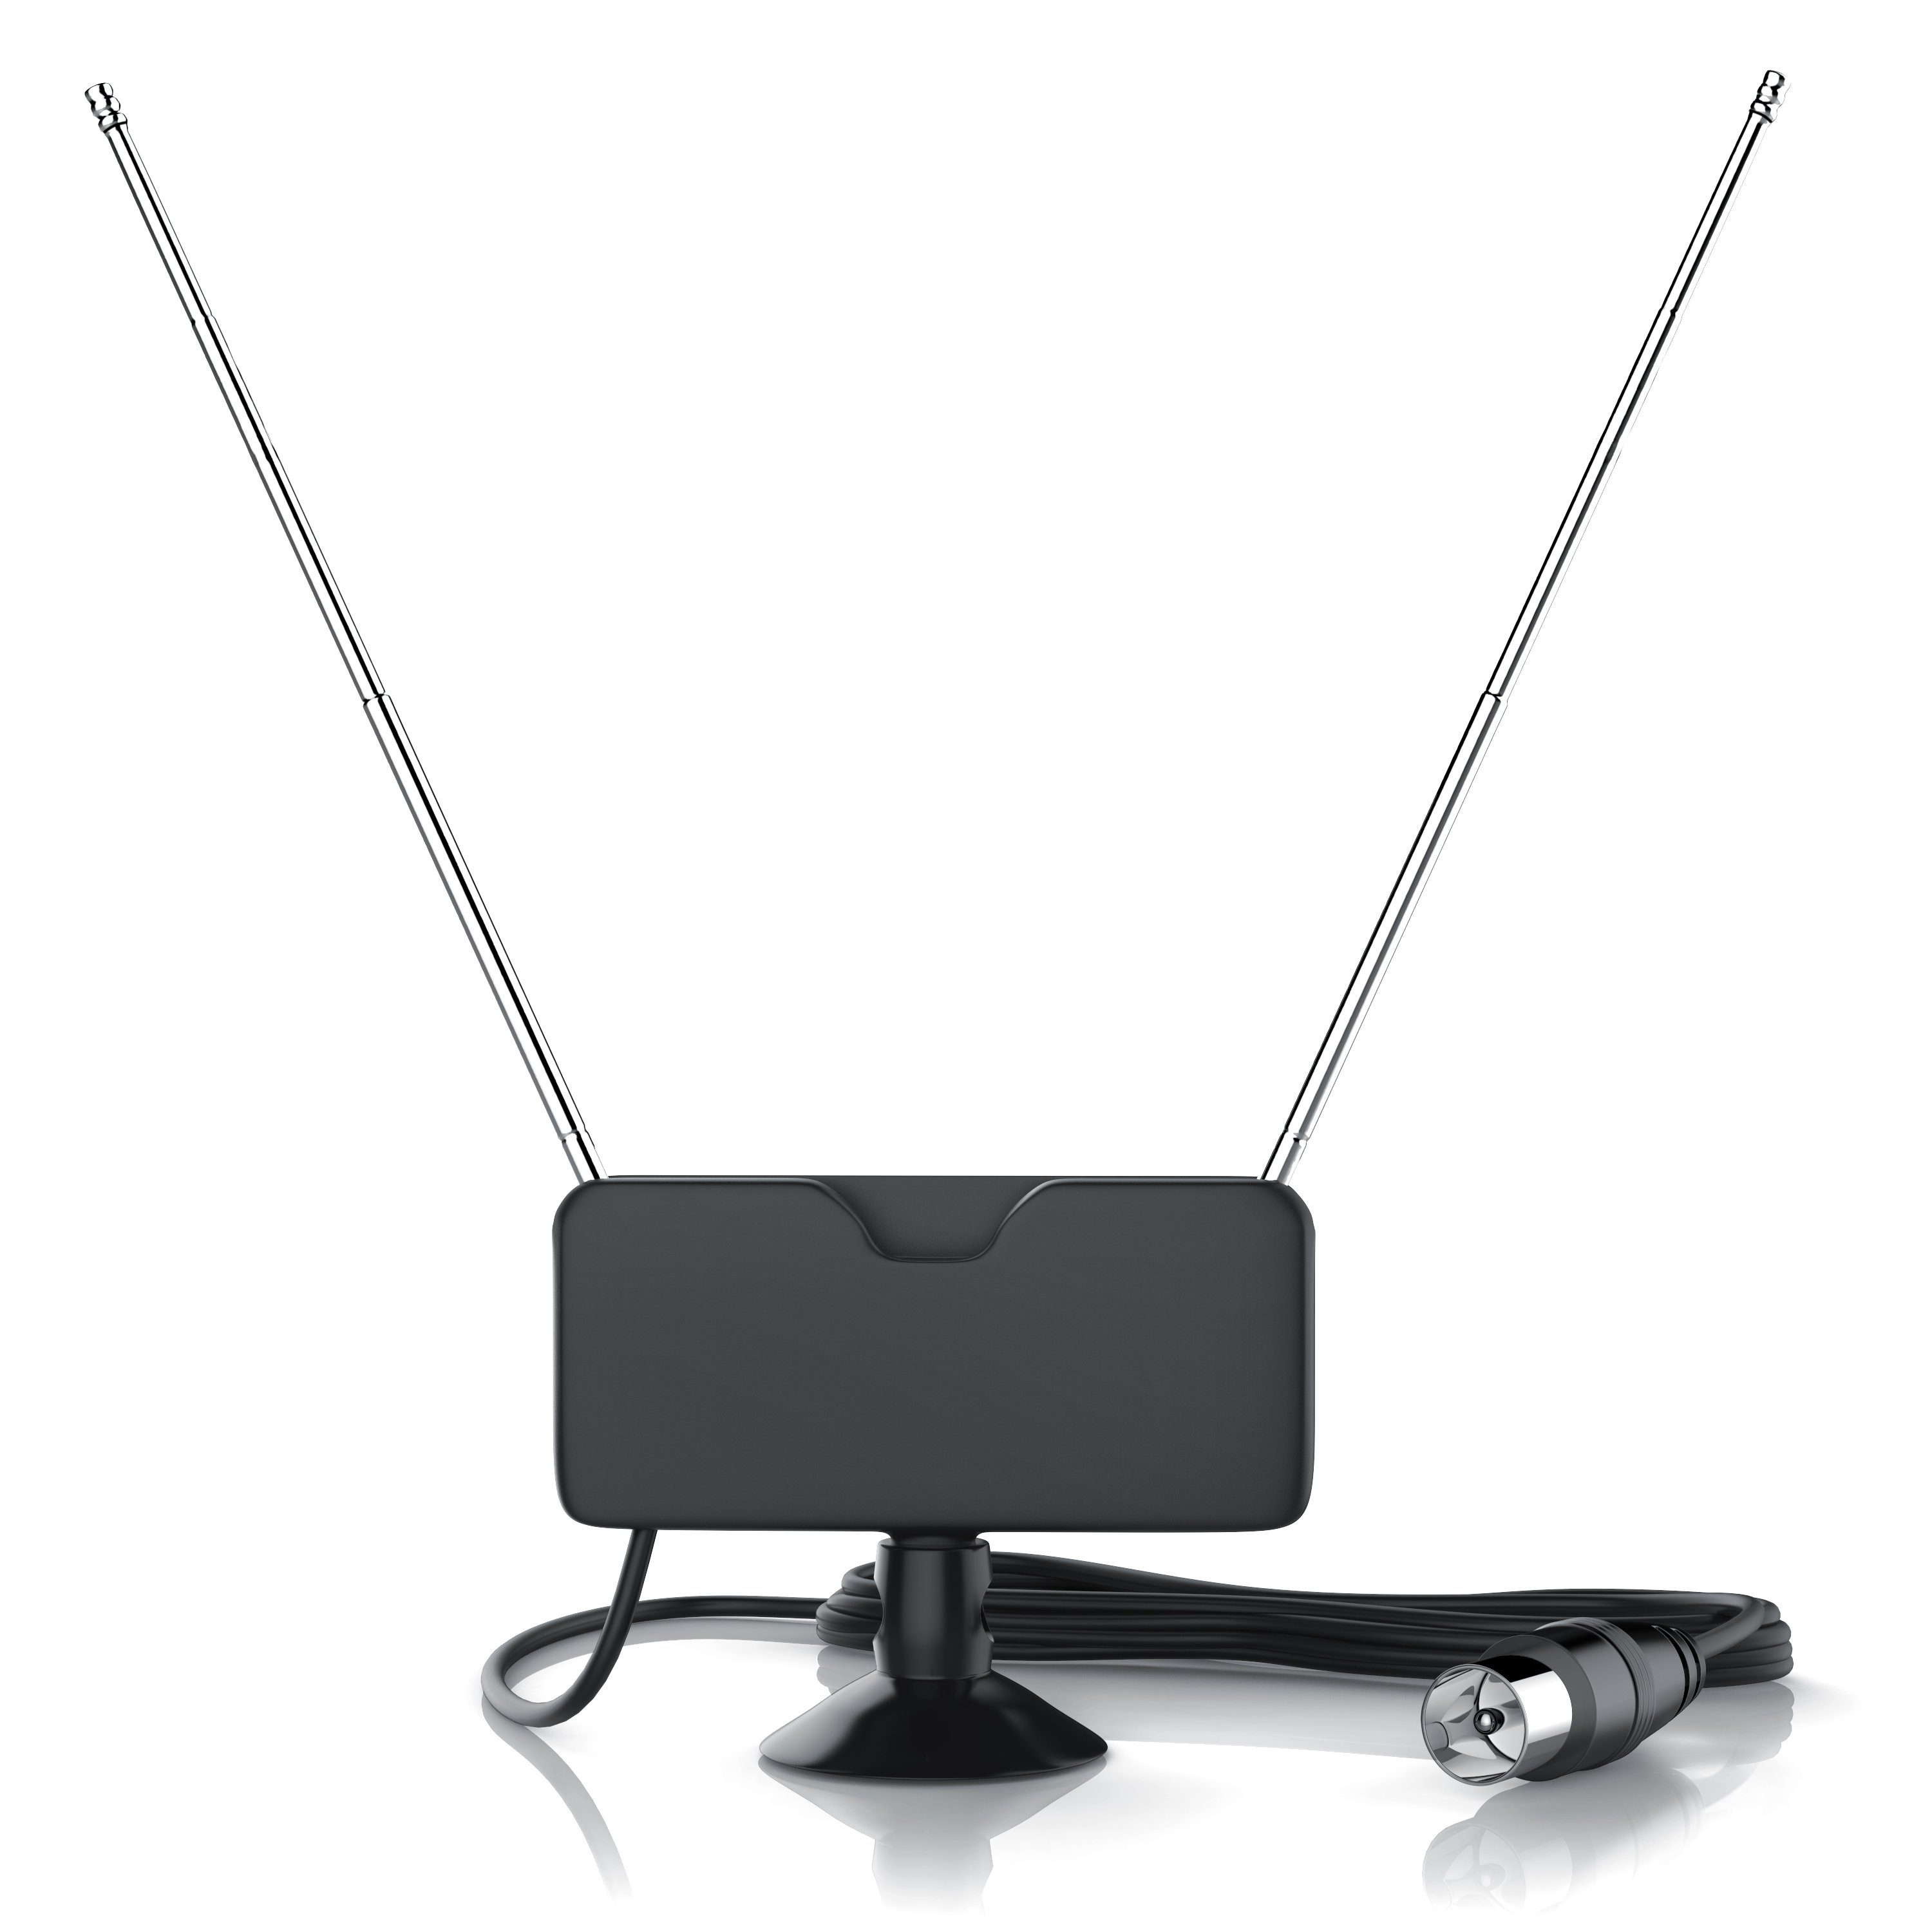 Aplic Stabantenne (DVB-T, DVB-T2, für Innenbereich), digitale DVB-T / DVB-T2  Antenne (passiv) zwei Teleskopantennen, gute Empfangsleistung online kaufen  | OTTO